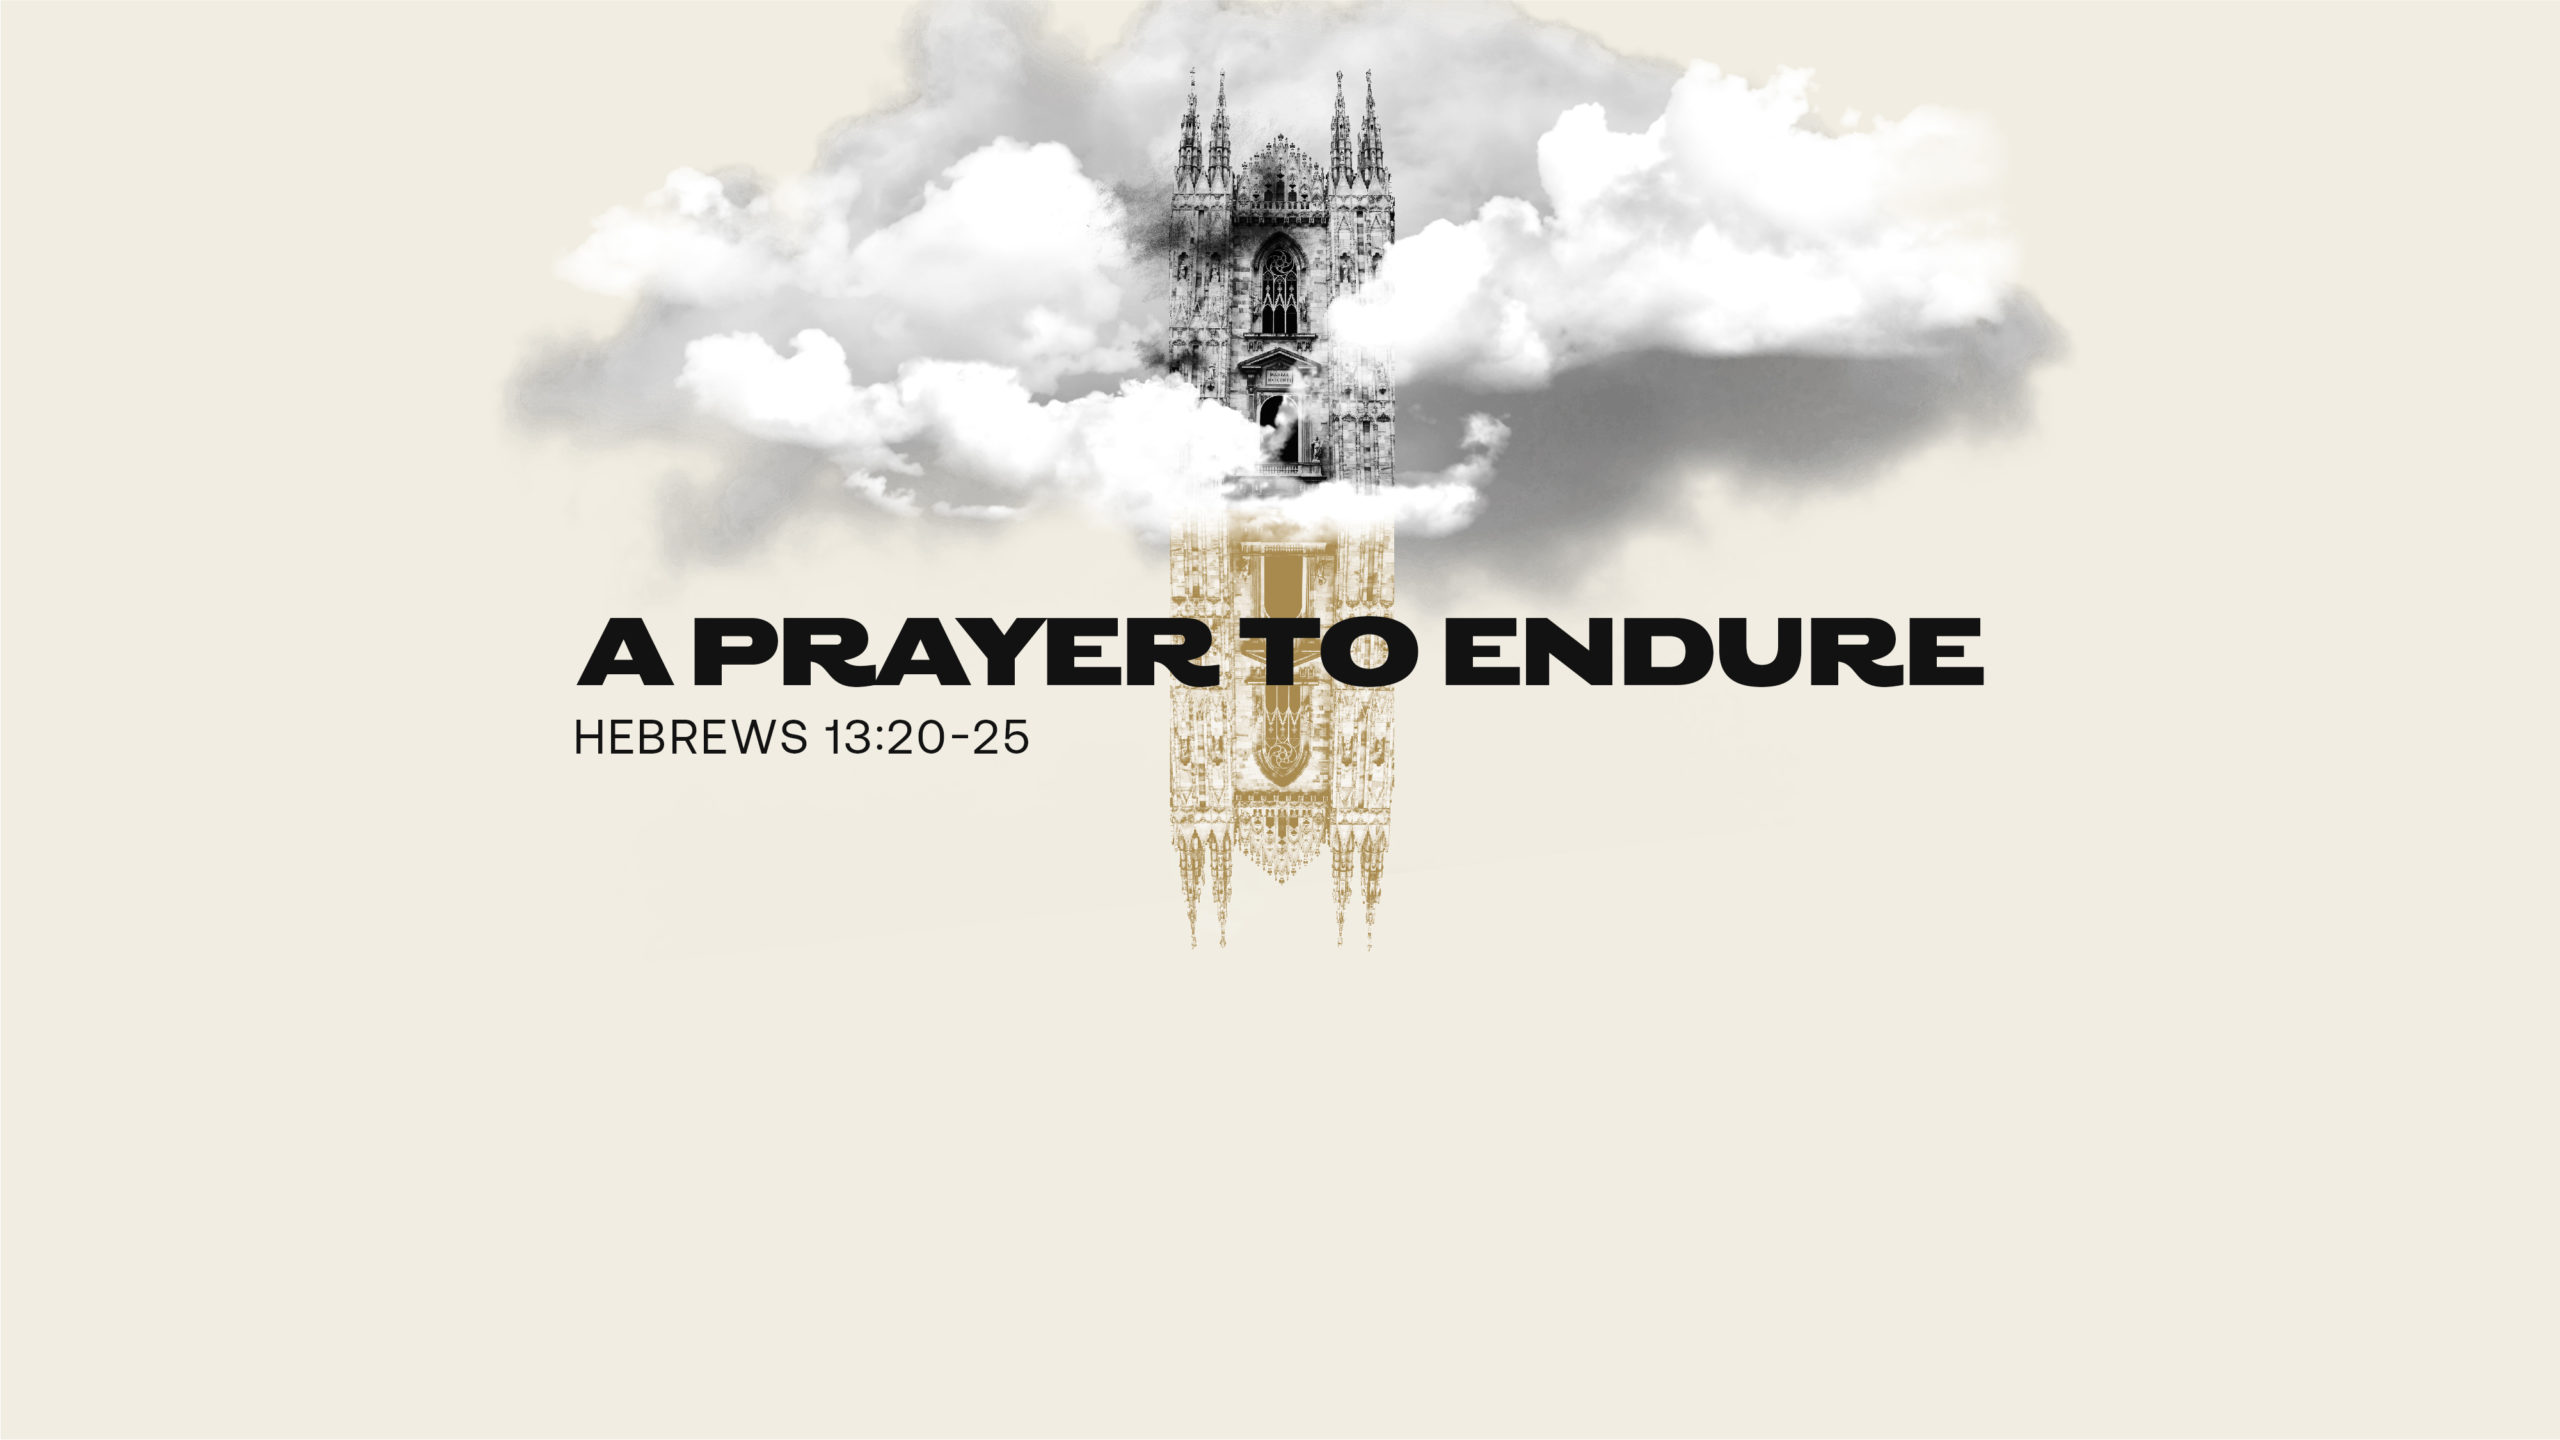 A Prayer to Endure